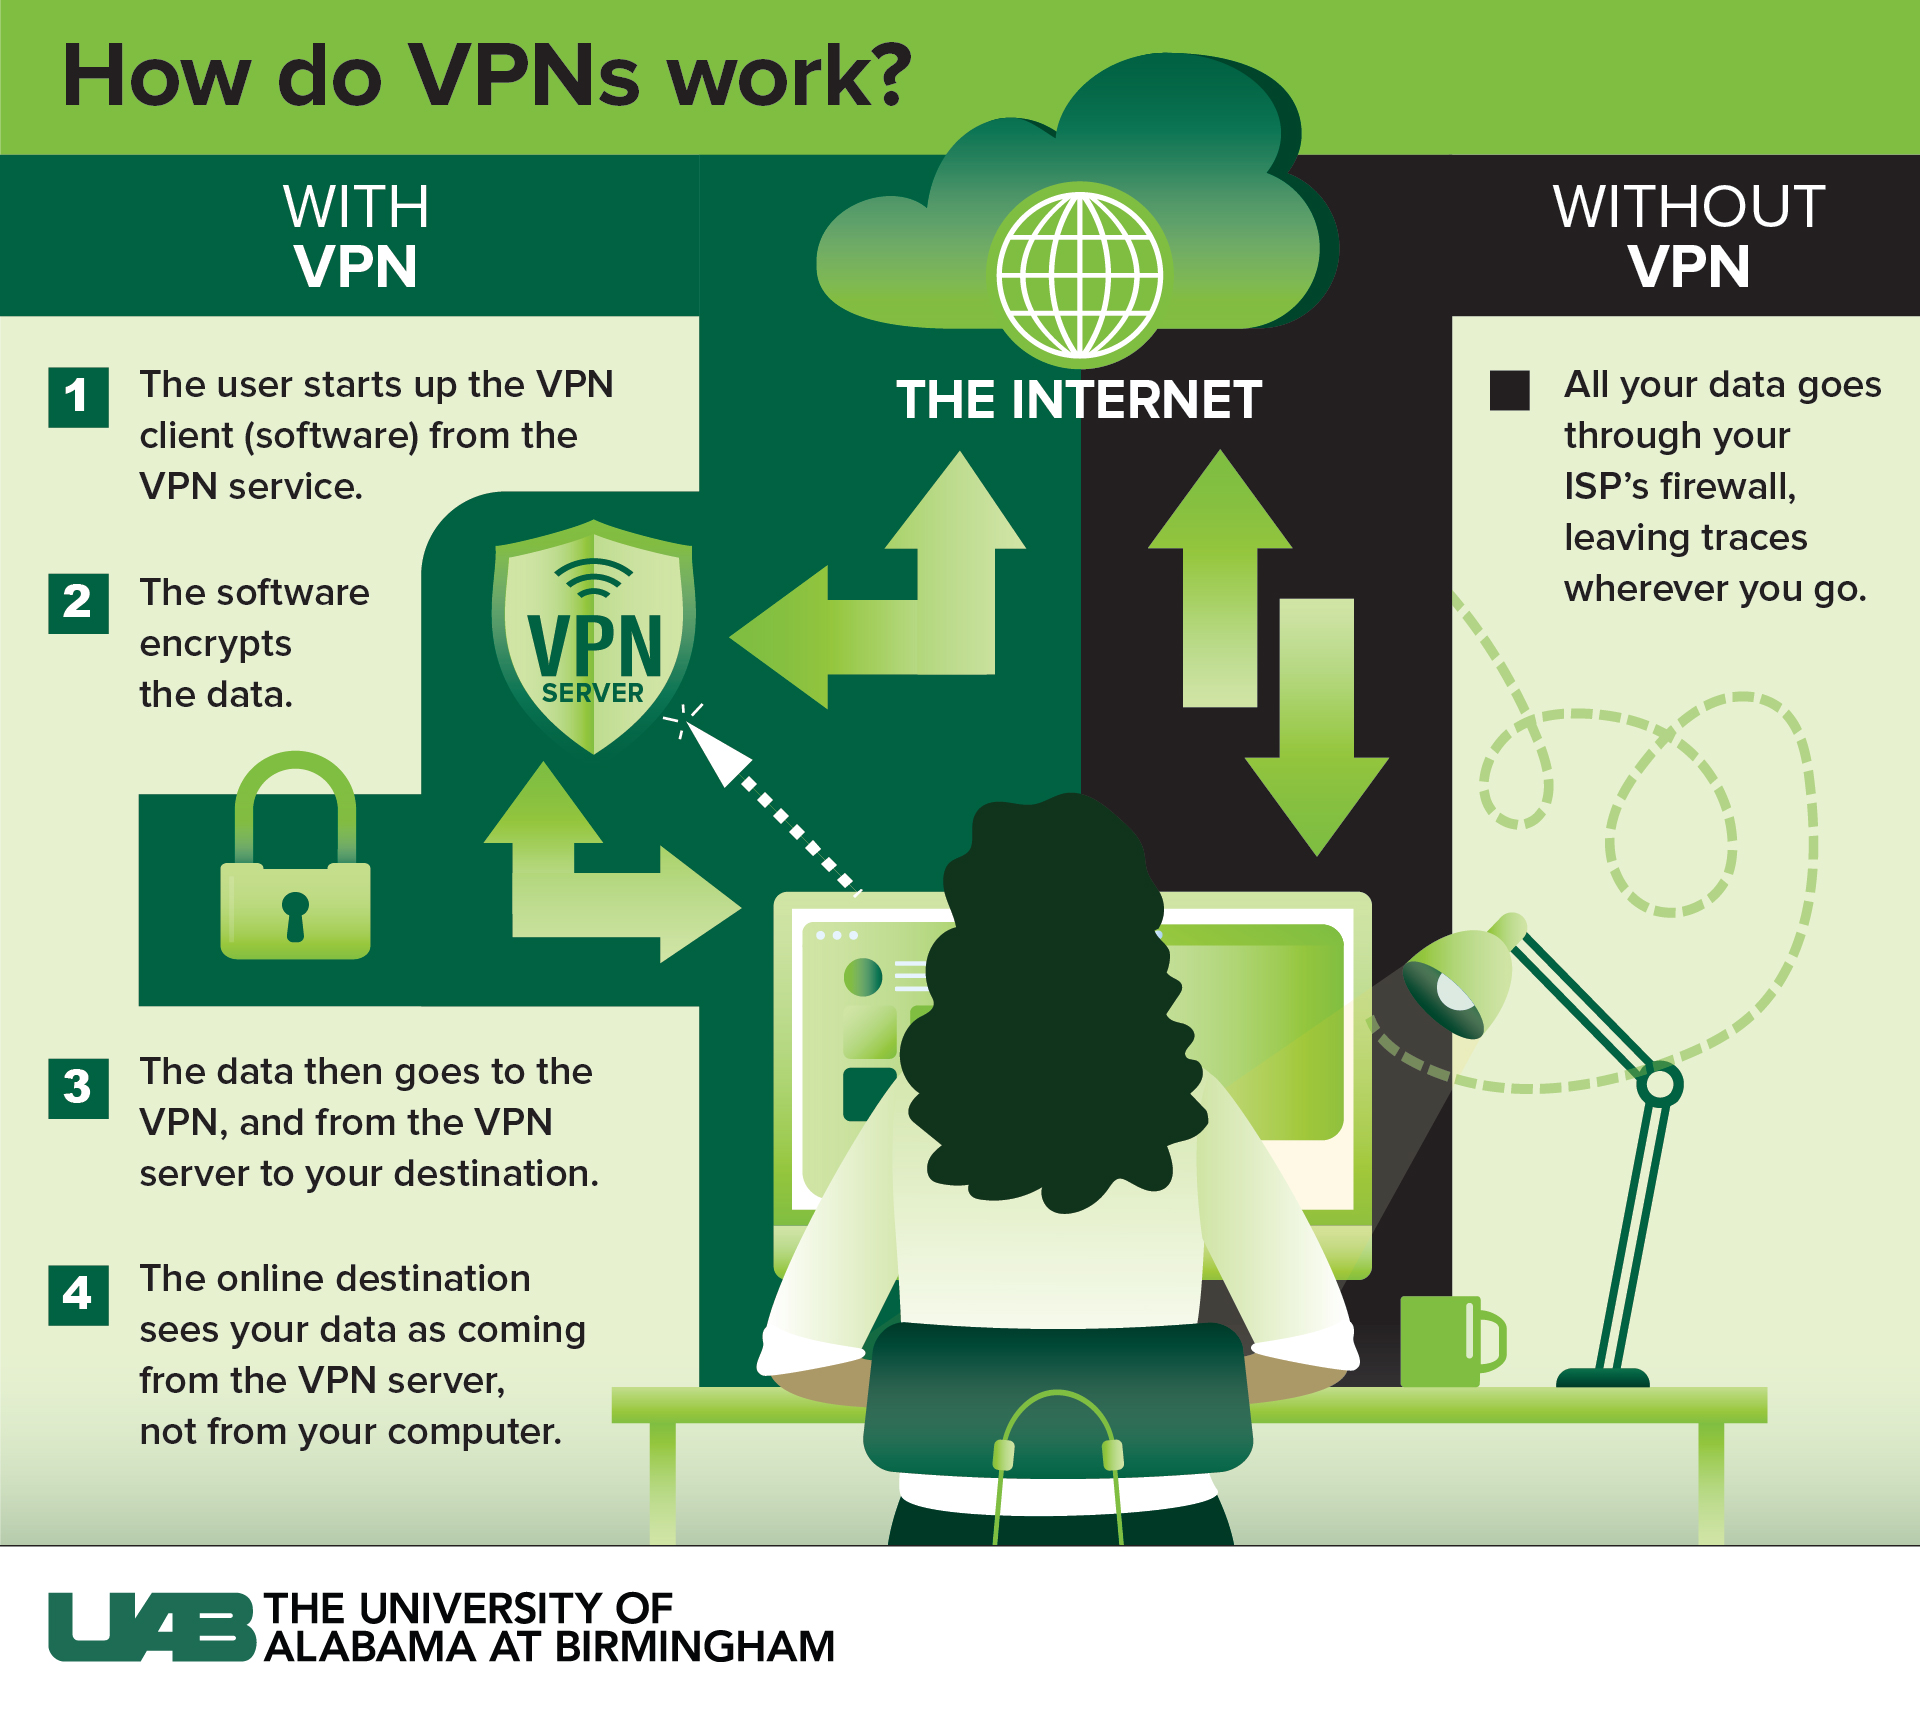 Should I always have a VPN on at home?